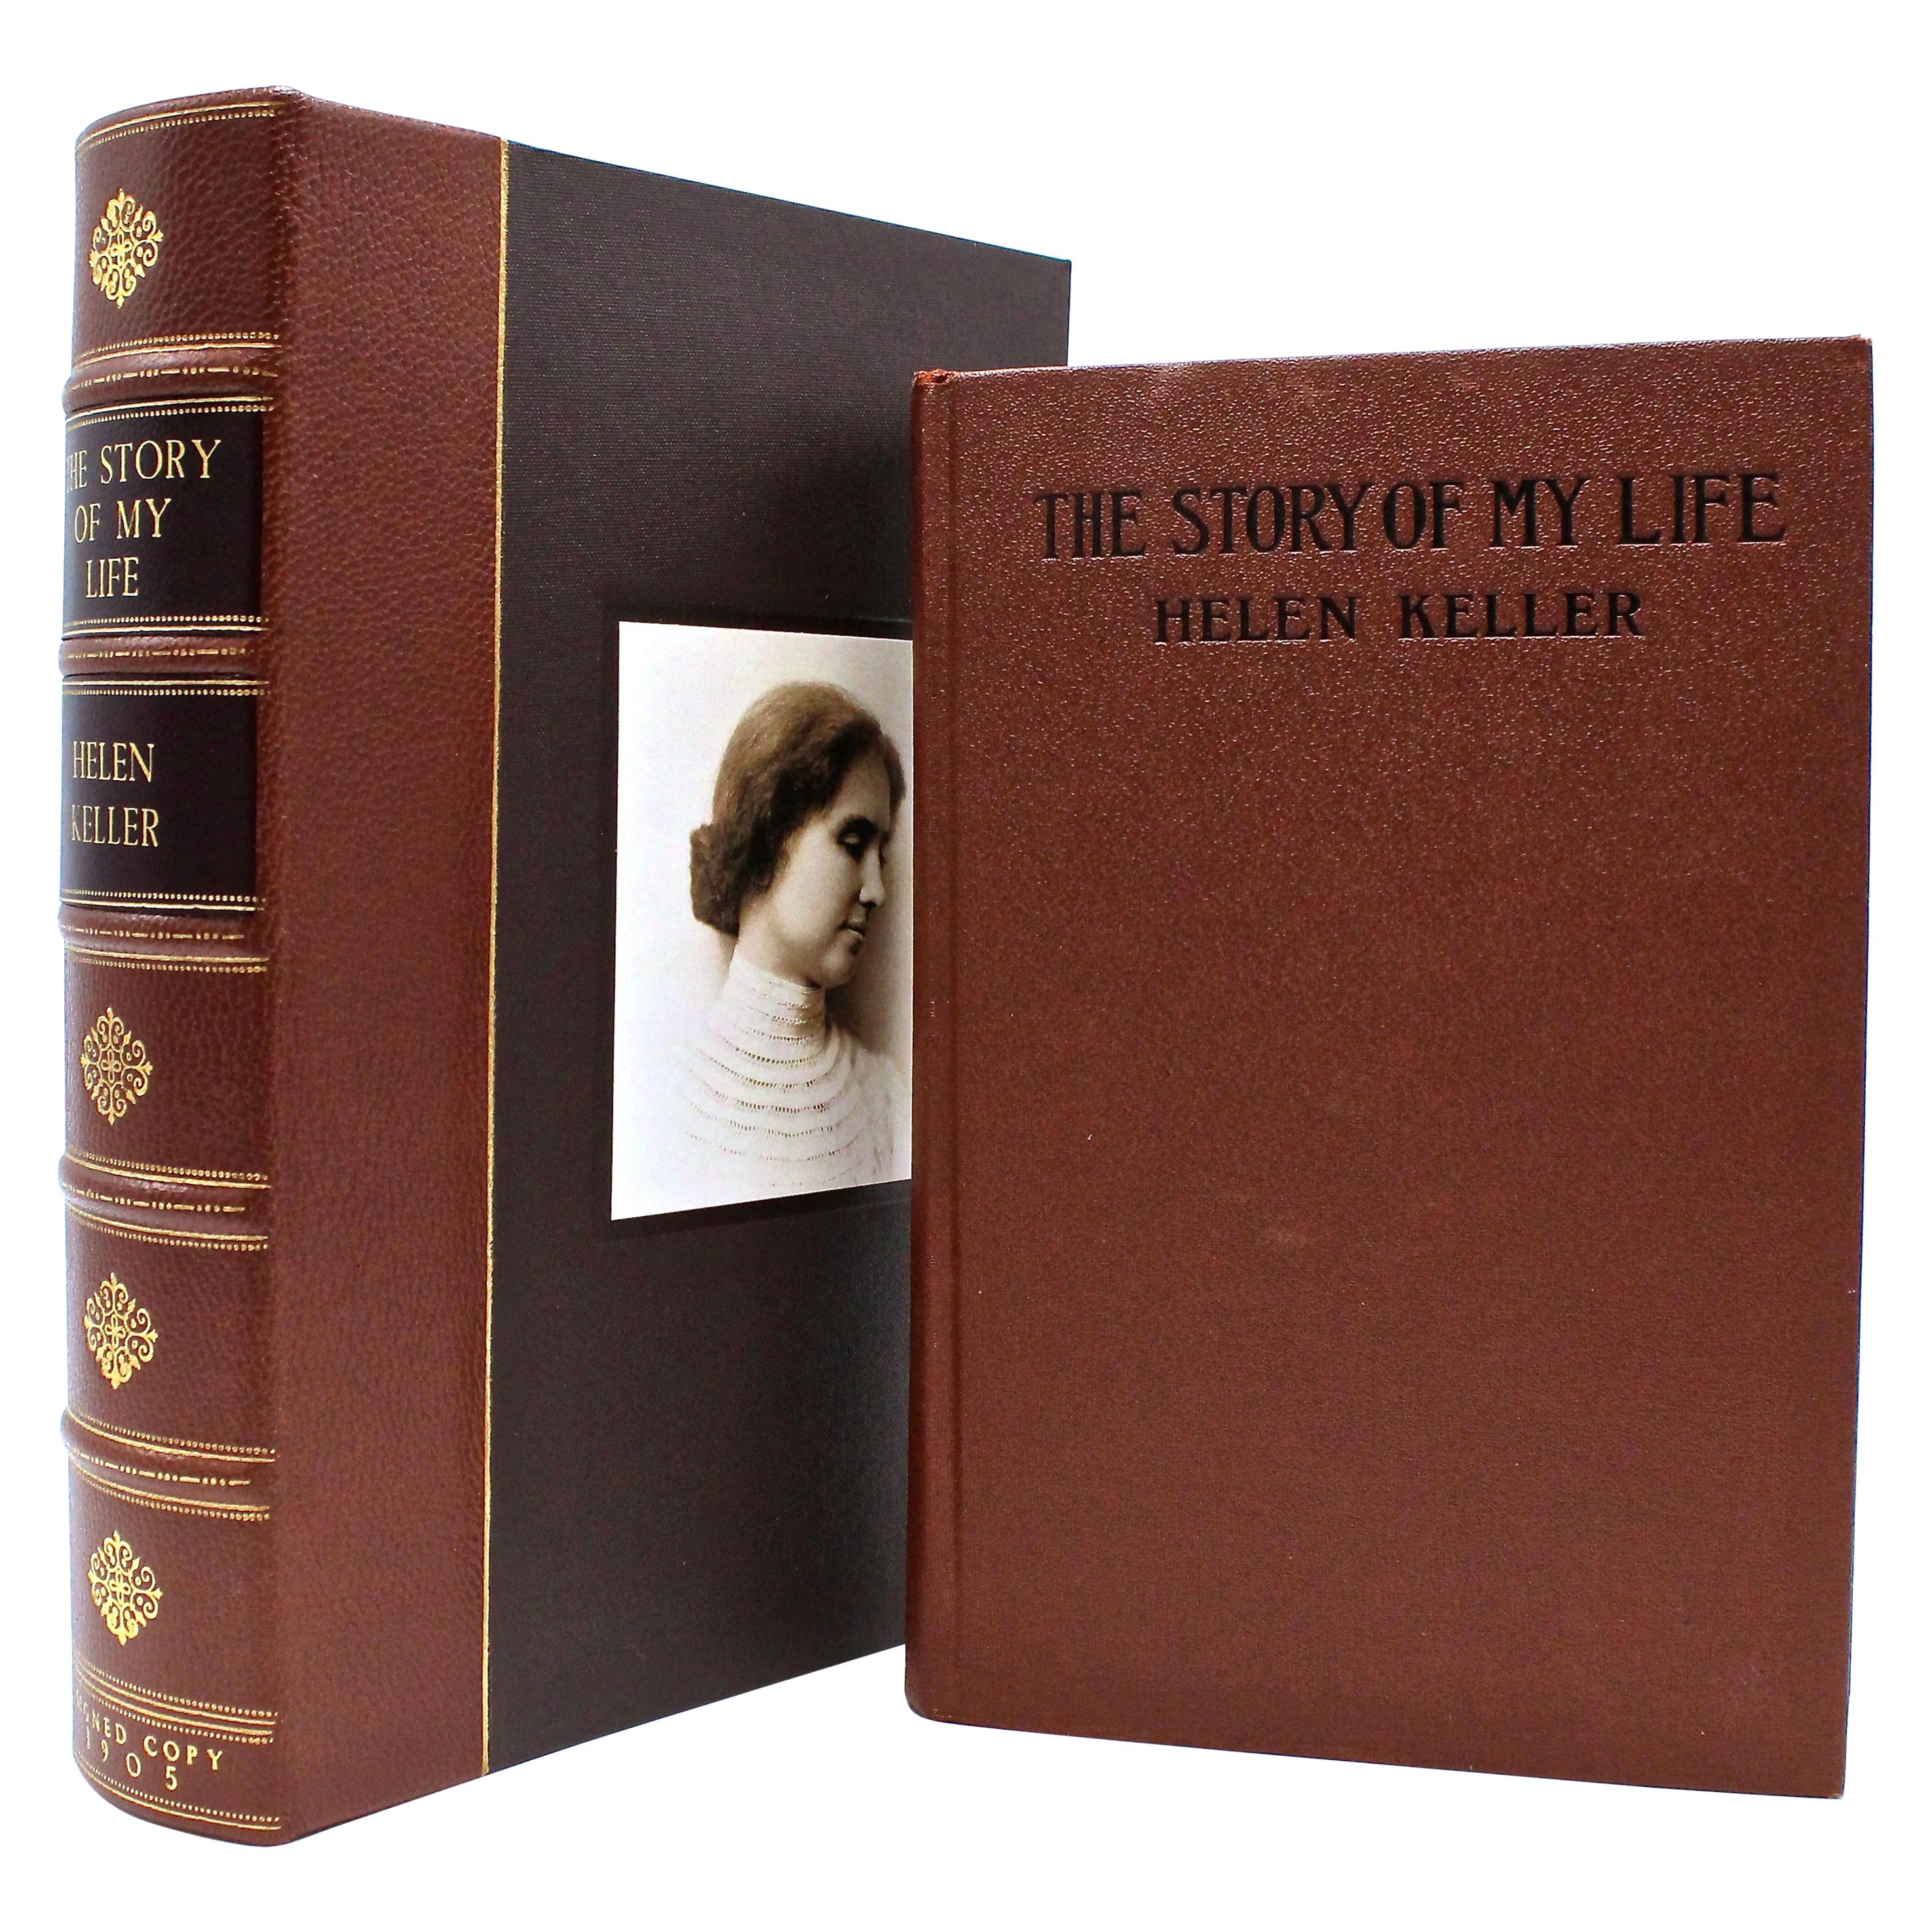 "Story of My Life" by Helen Keller, Signed by Helen Keller, 1905